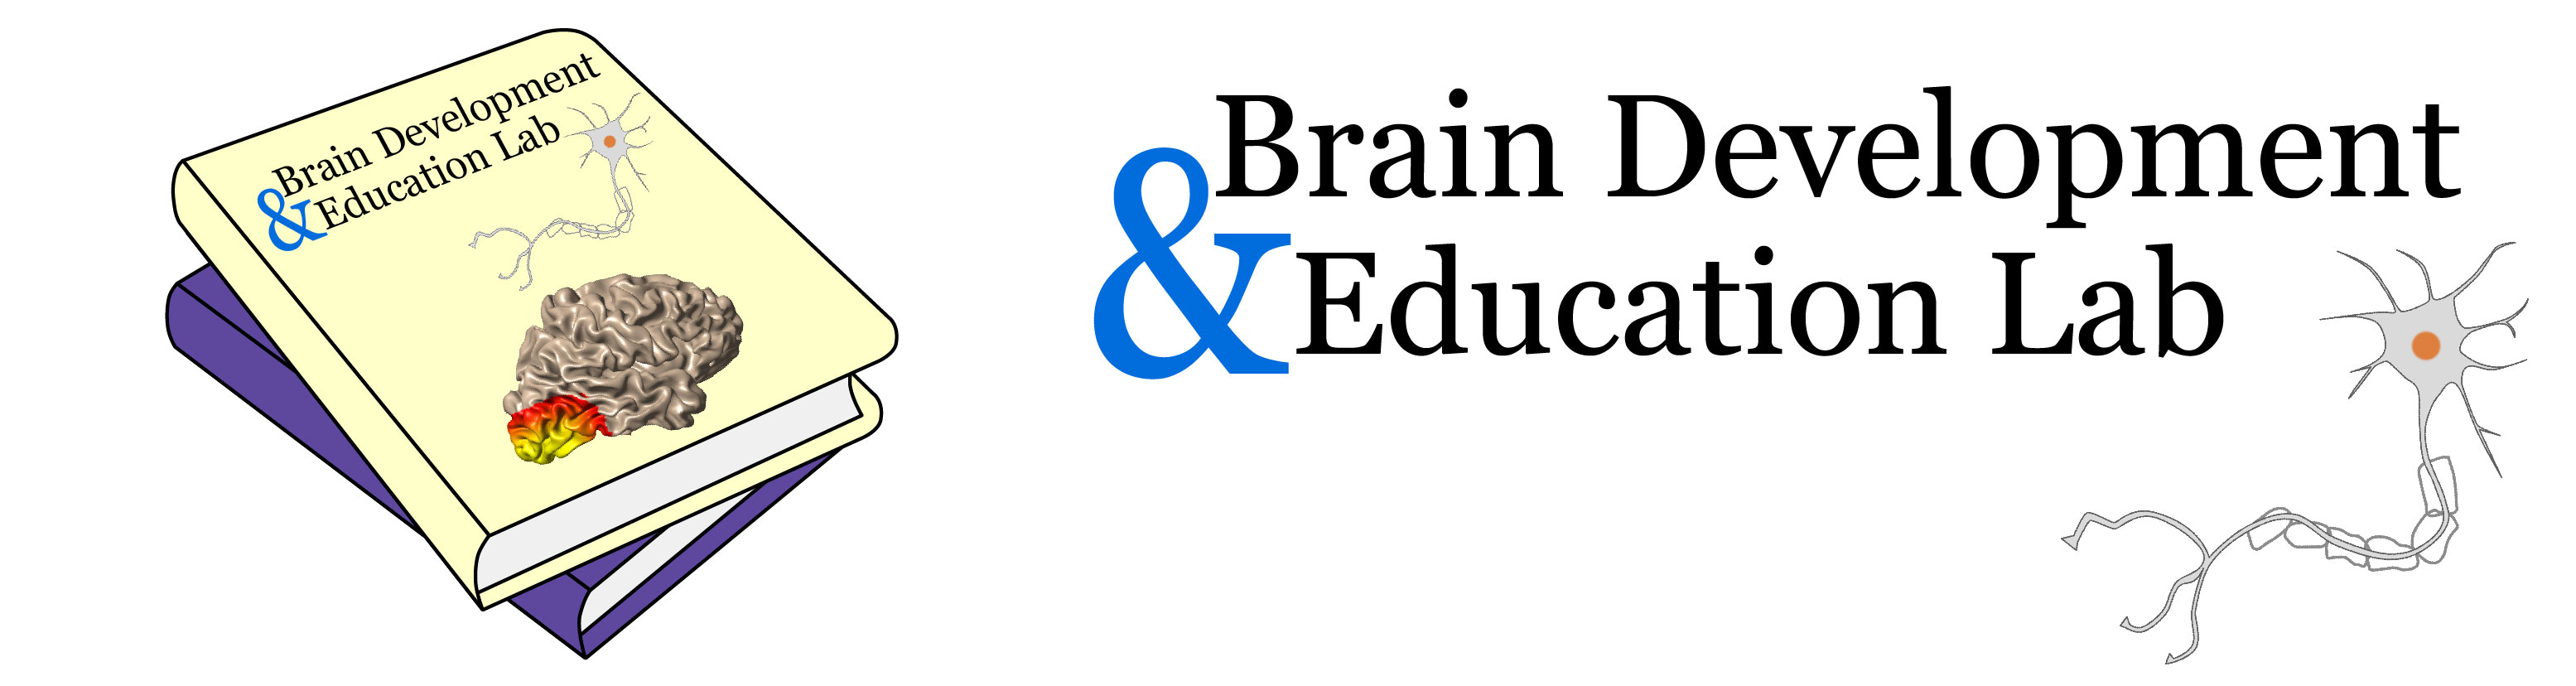 Brain Development & Education Lab